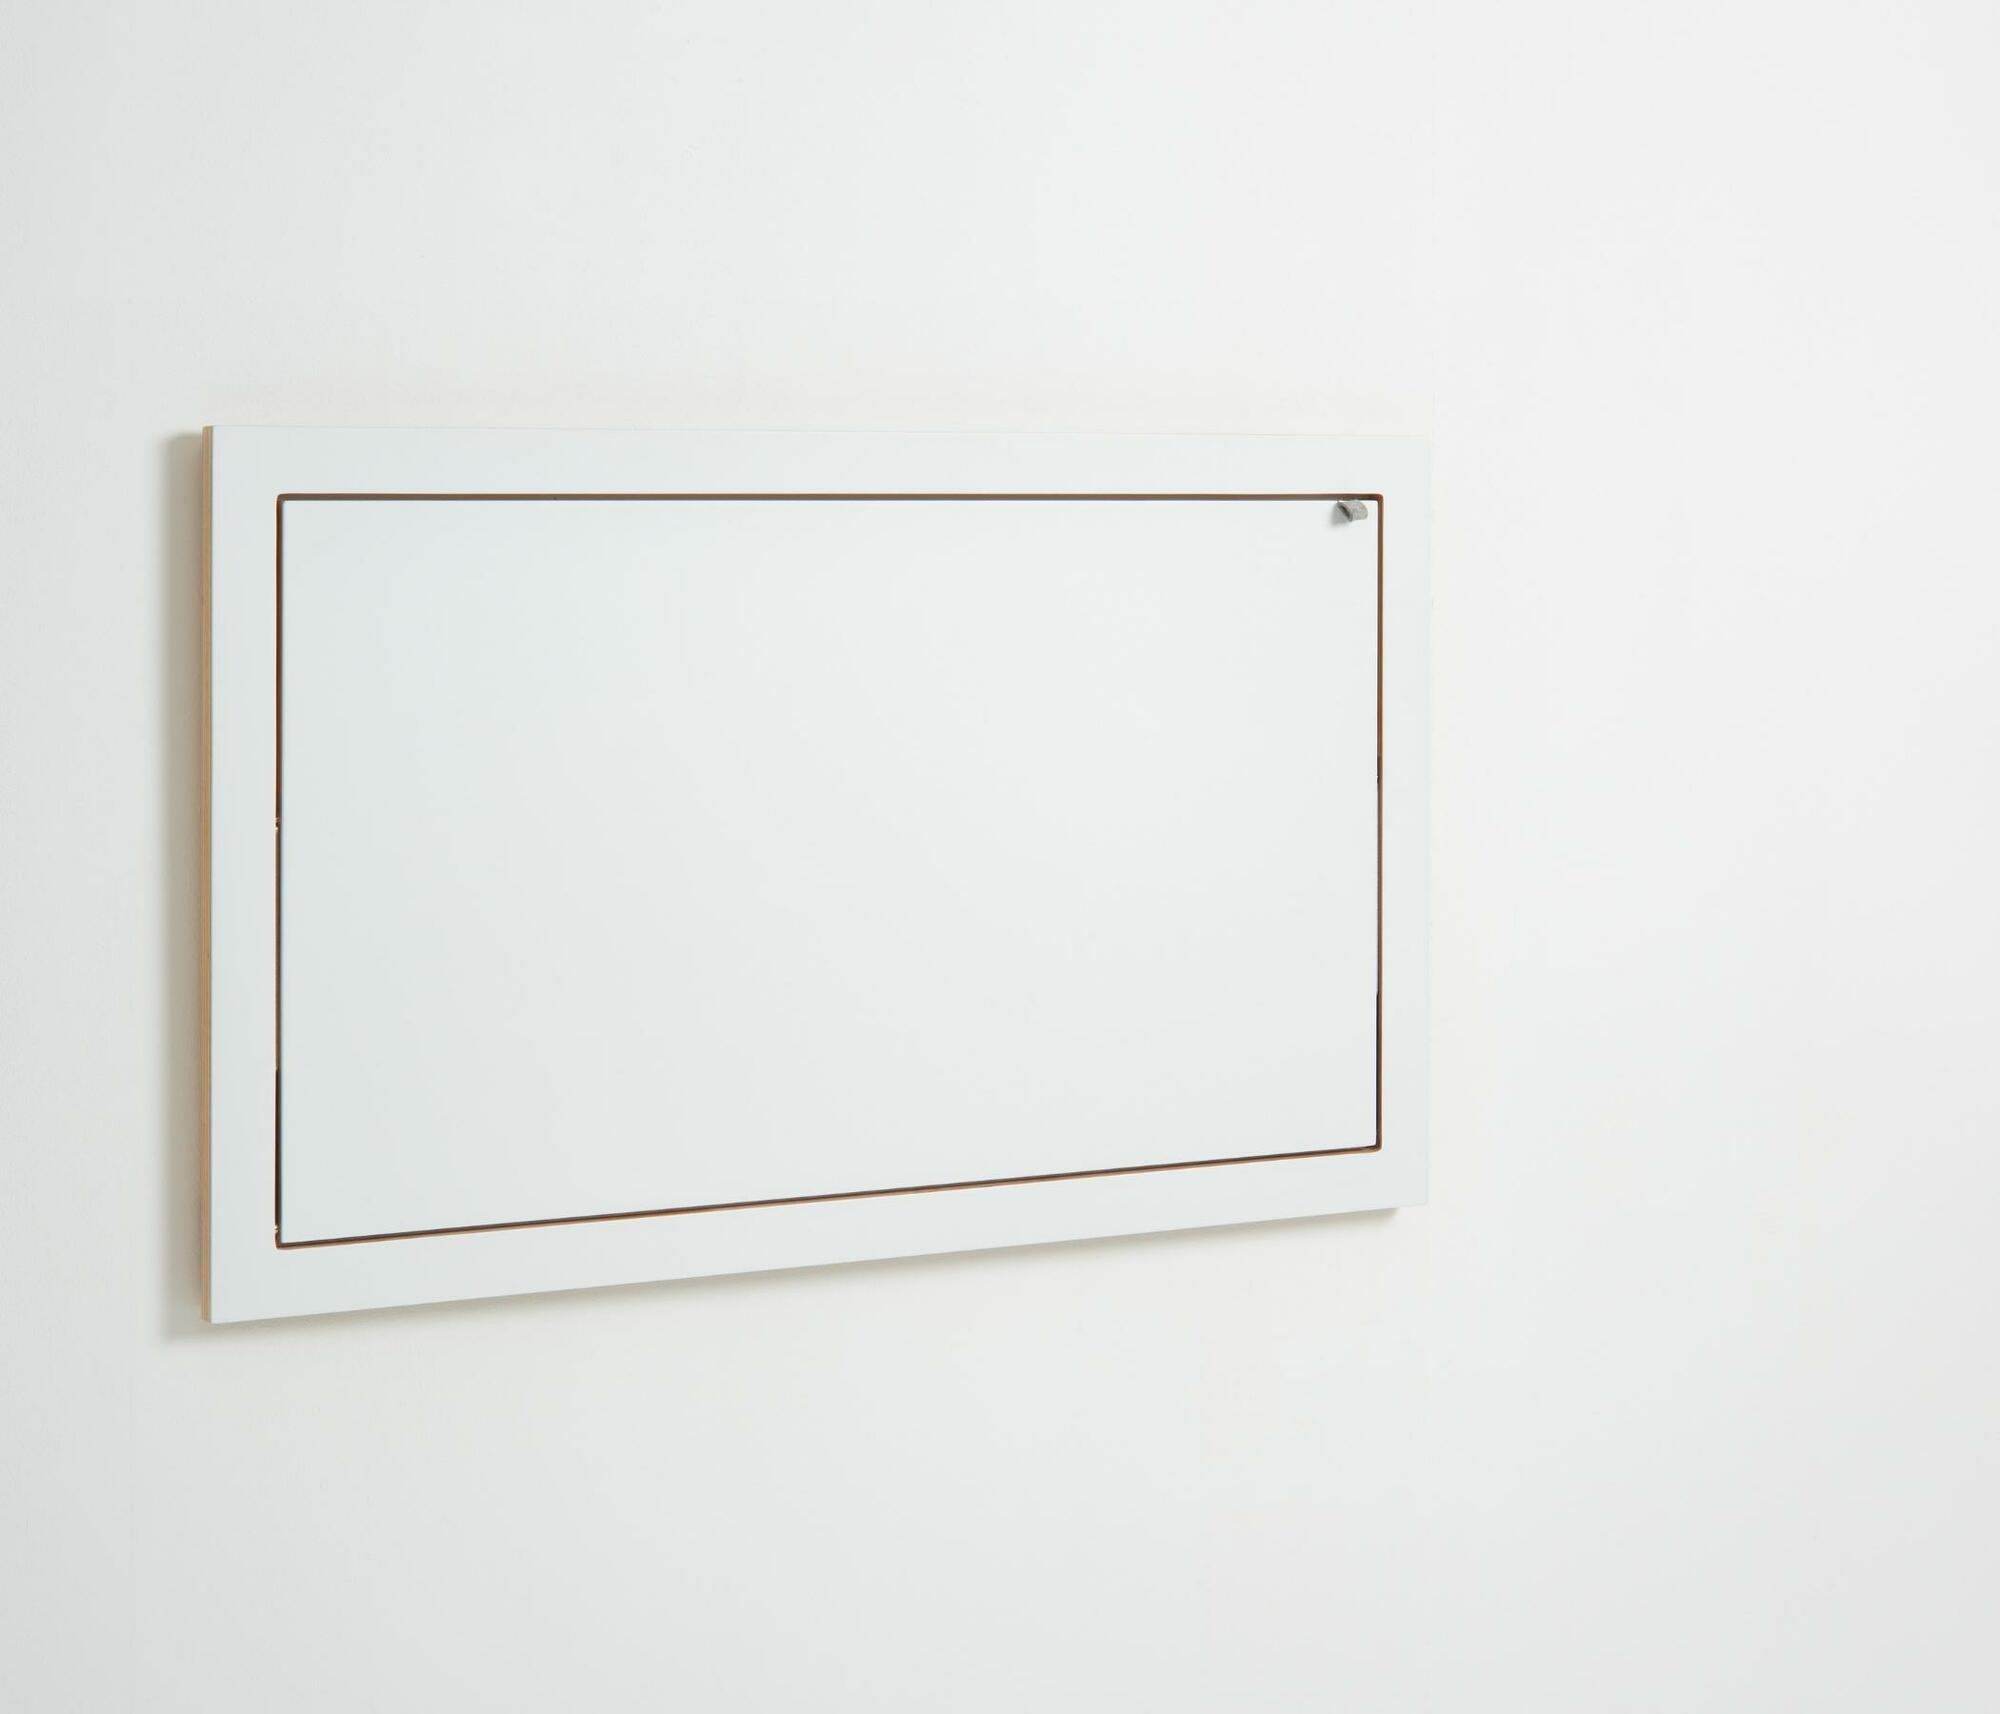 Fläpps Sekretär Holz Weiß 100 x 60 cm 4